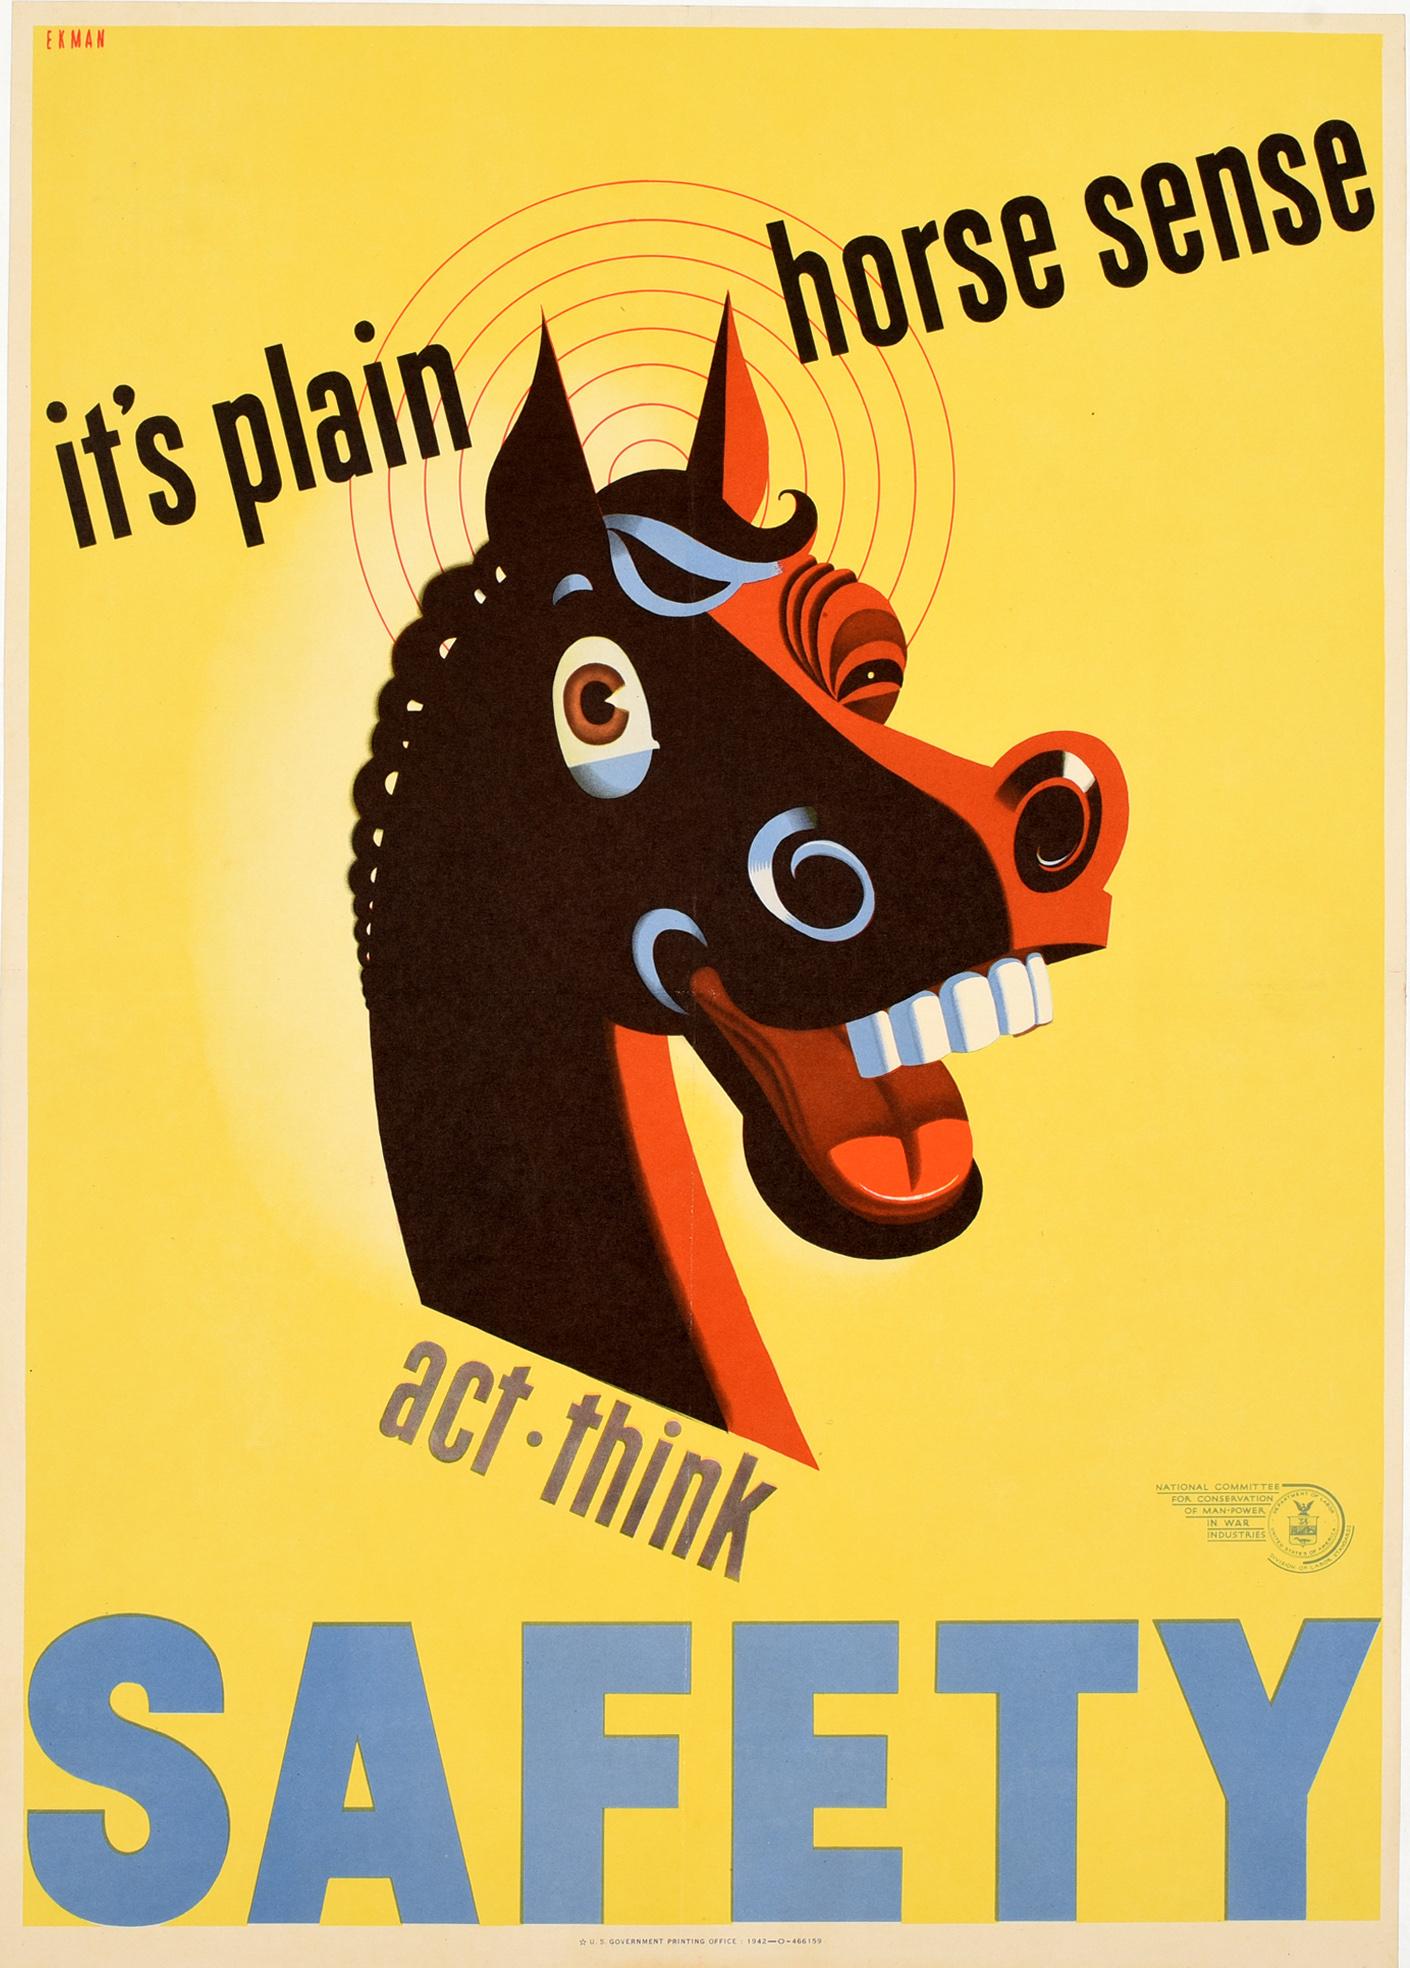 Stanley Ekman Print - Original Vintage Poster Plain Horse Sense Act Think Safety War Industries WWII